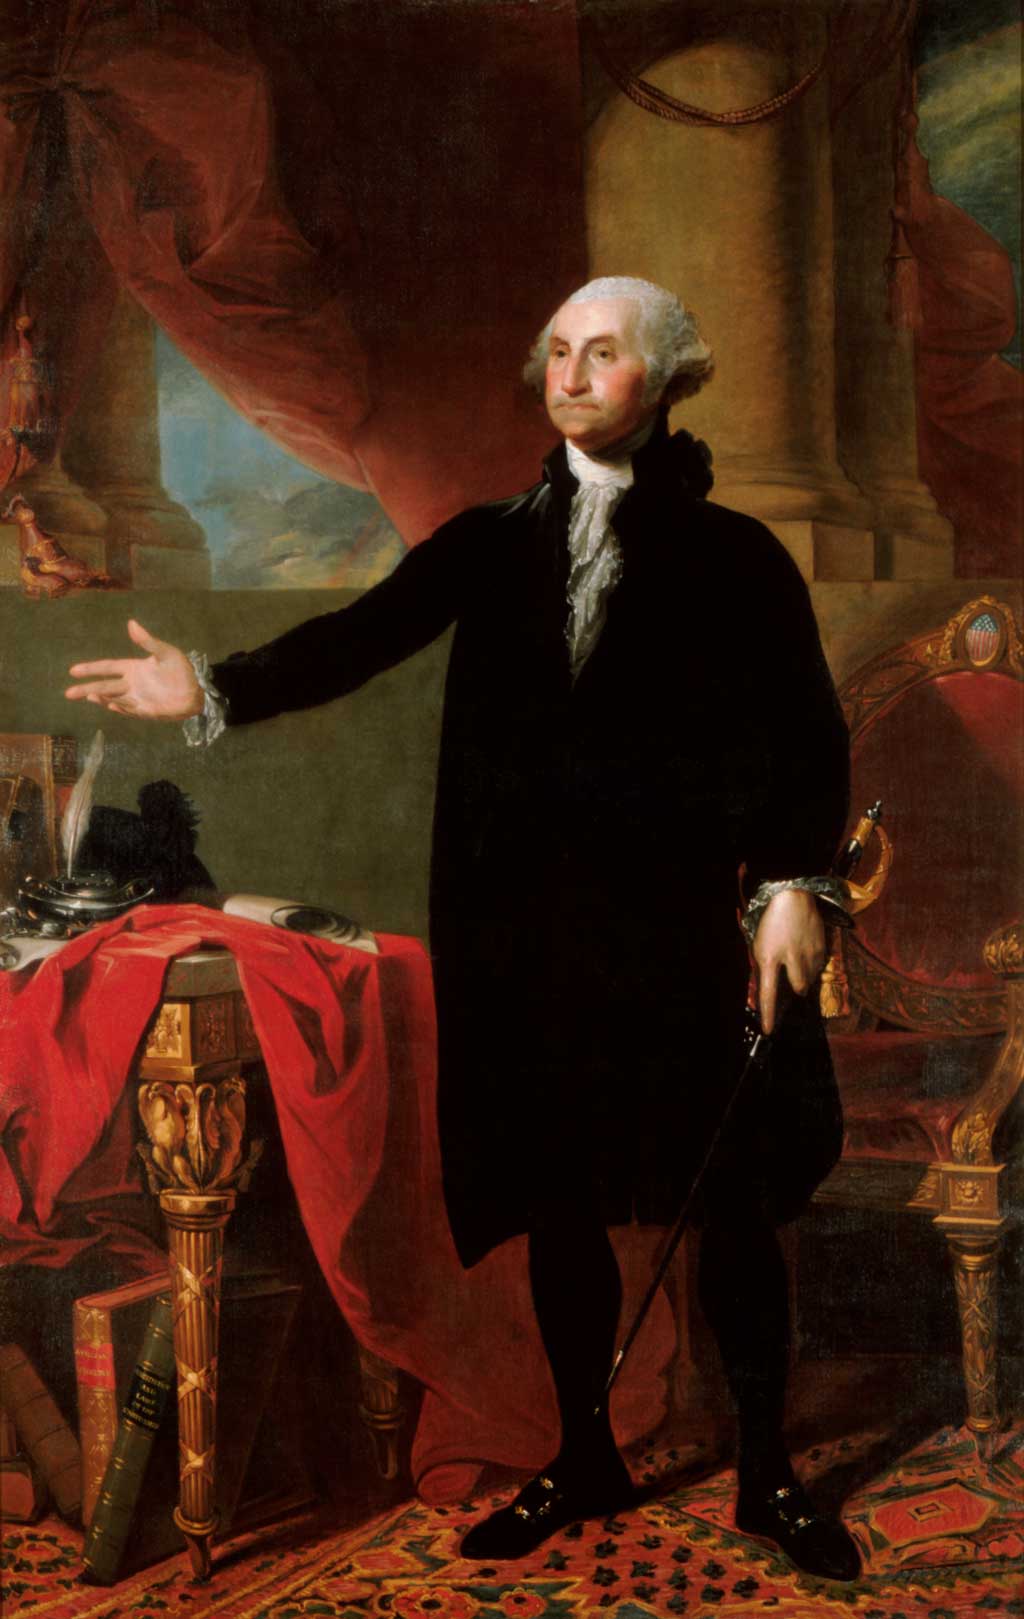 Portrait of George Washington standing